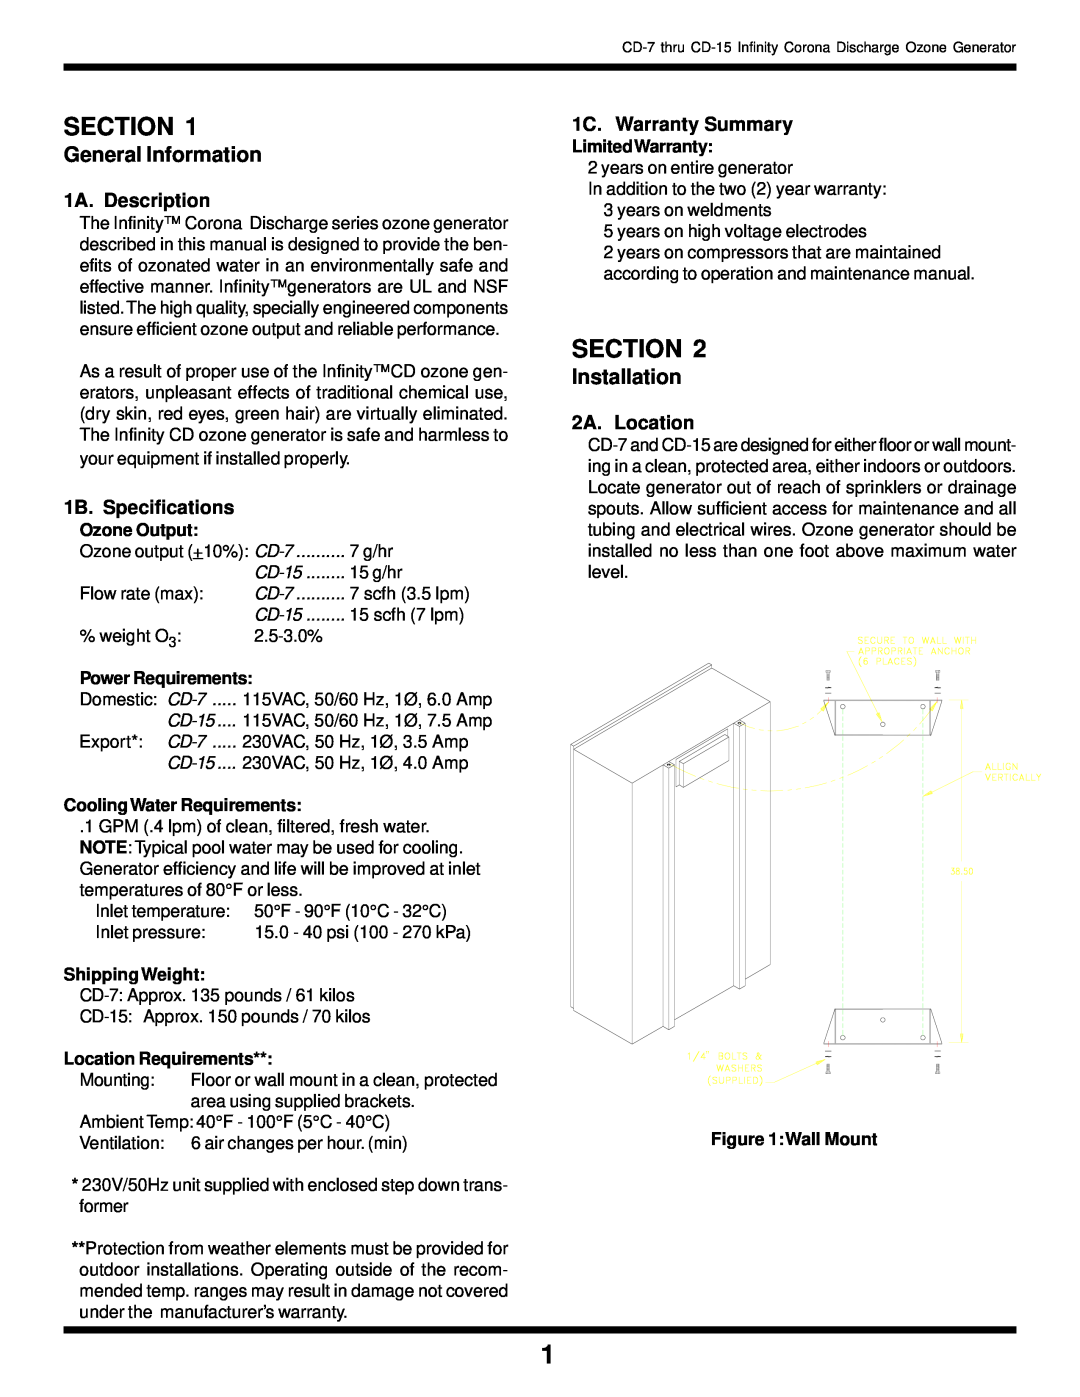 Infinity CD-7 THRU CD-15 General Information, Installation, 1A. Description, 1B. Specifications, 1C. Warranty Summary 